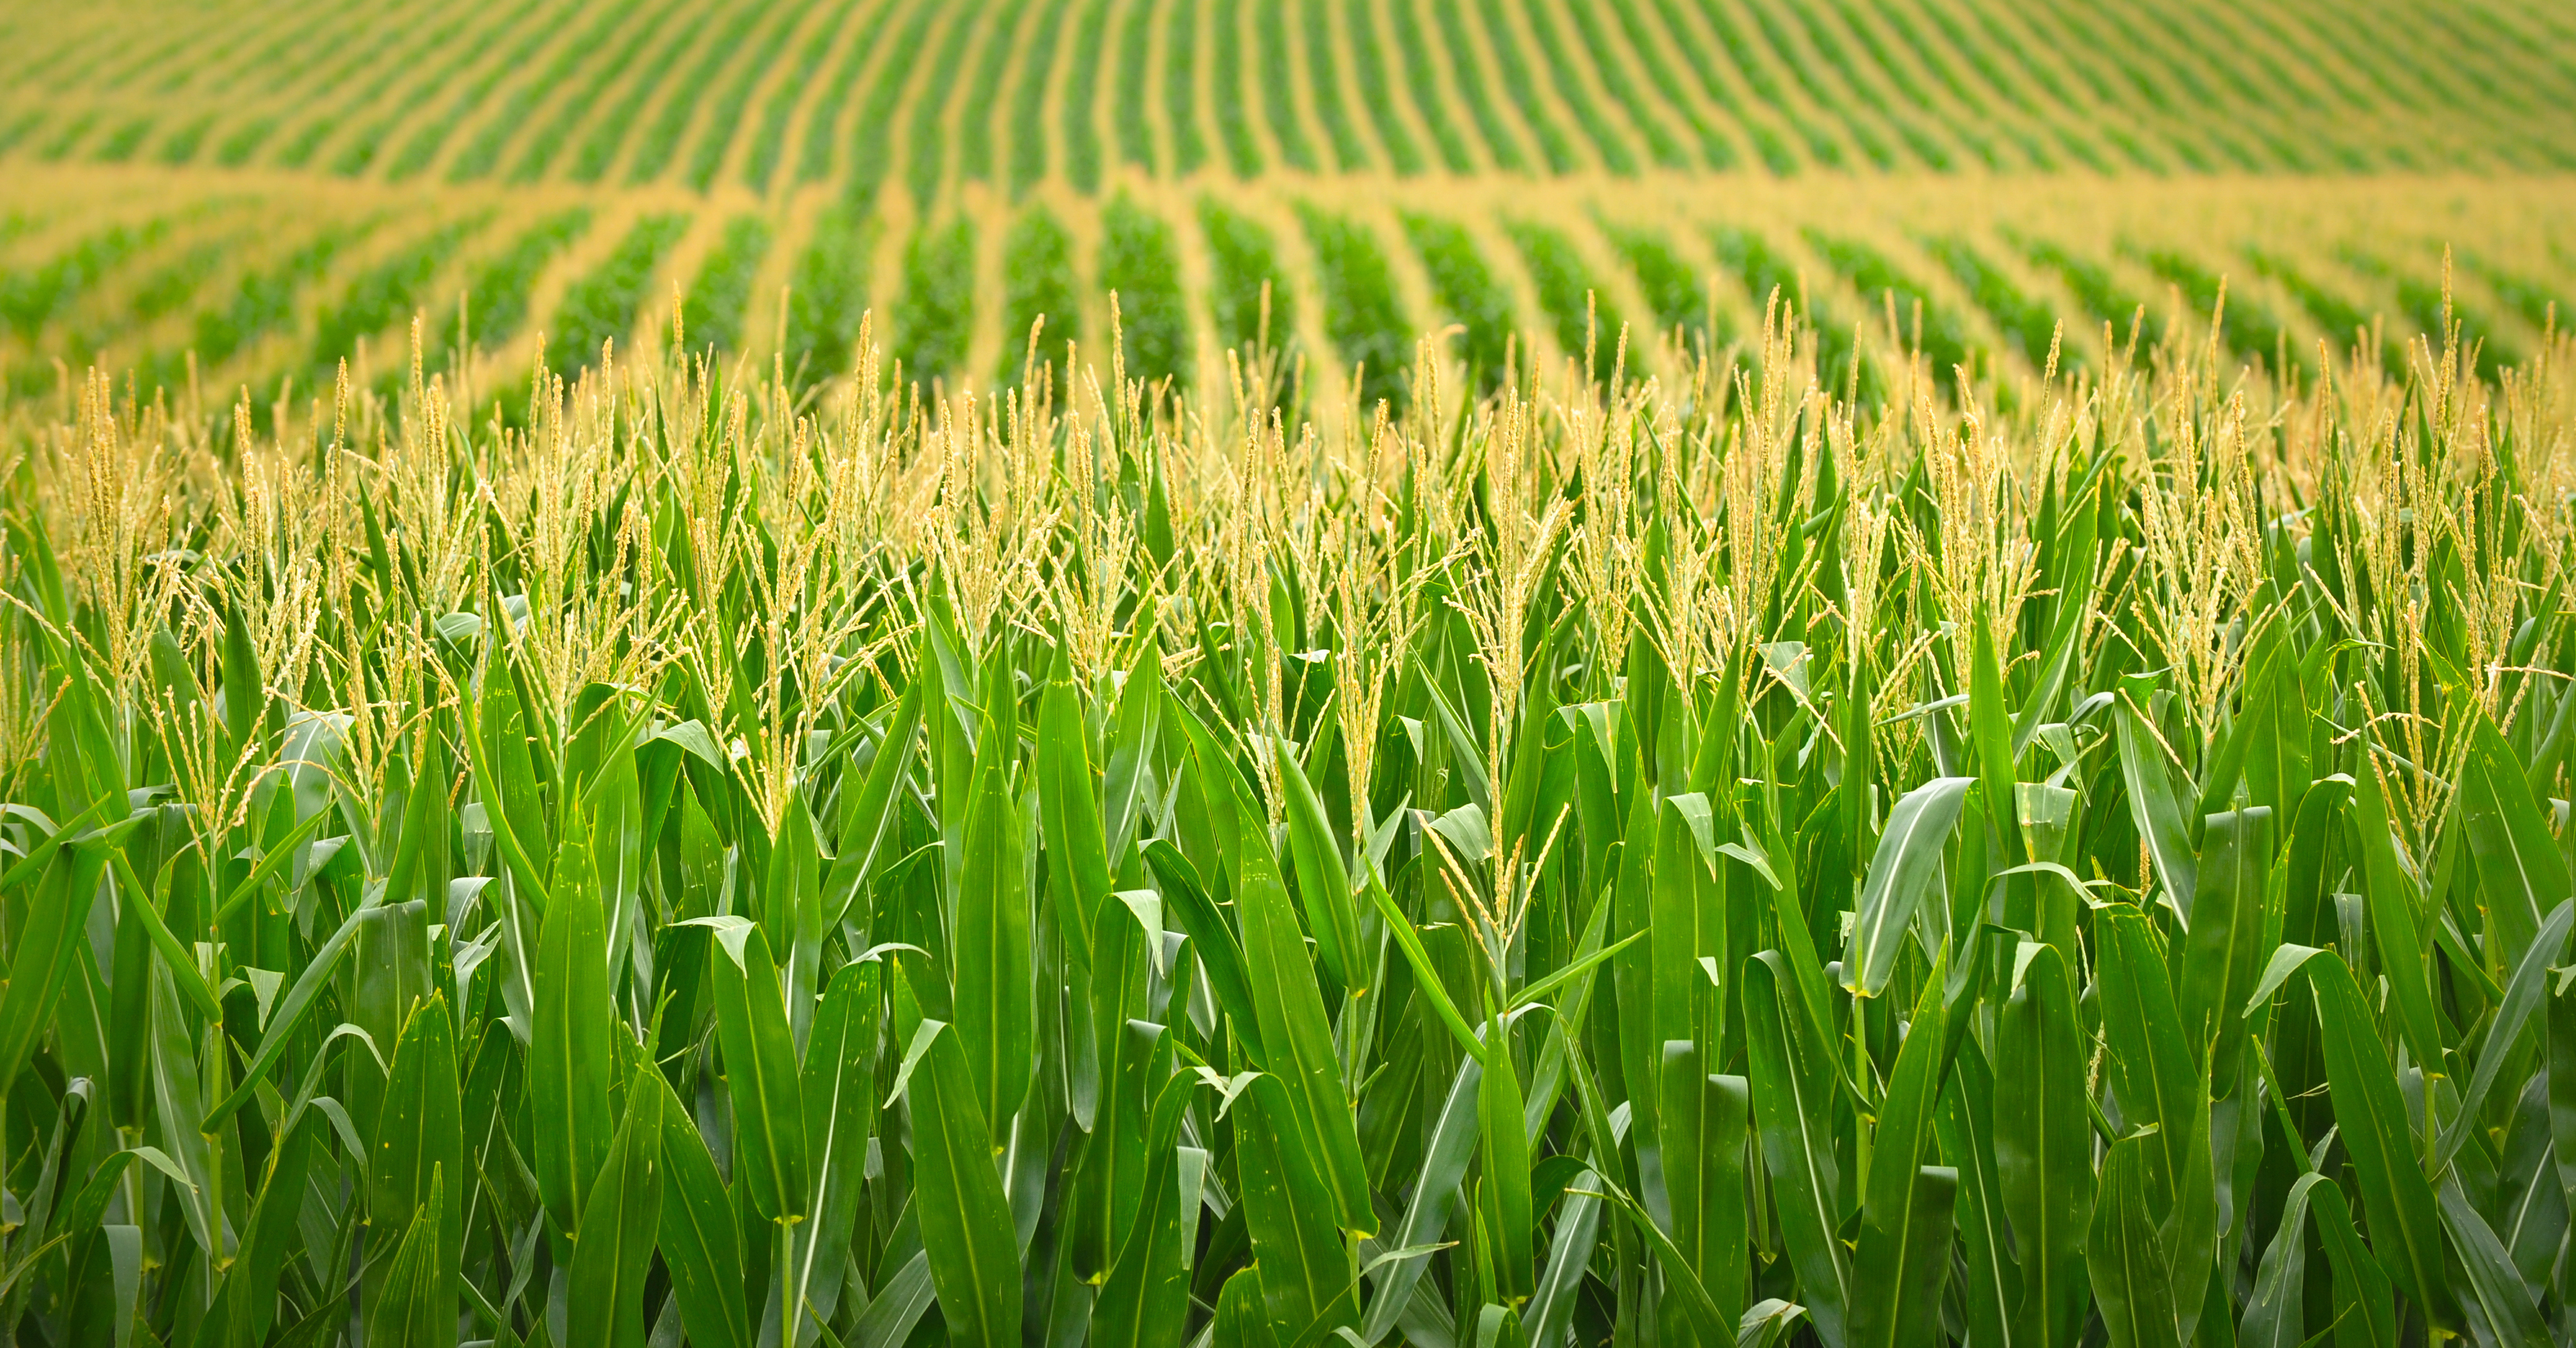 Farmland's inflation-hedging characteristics